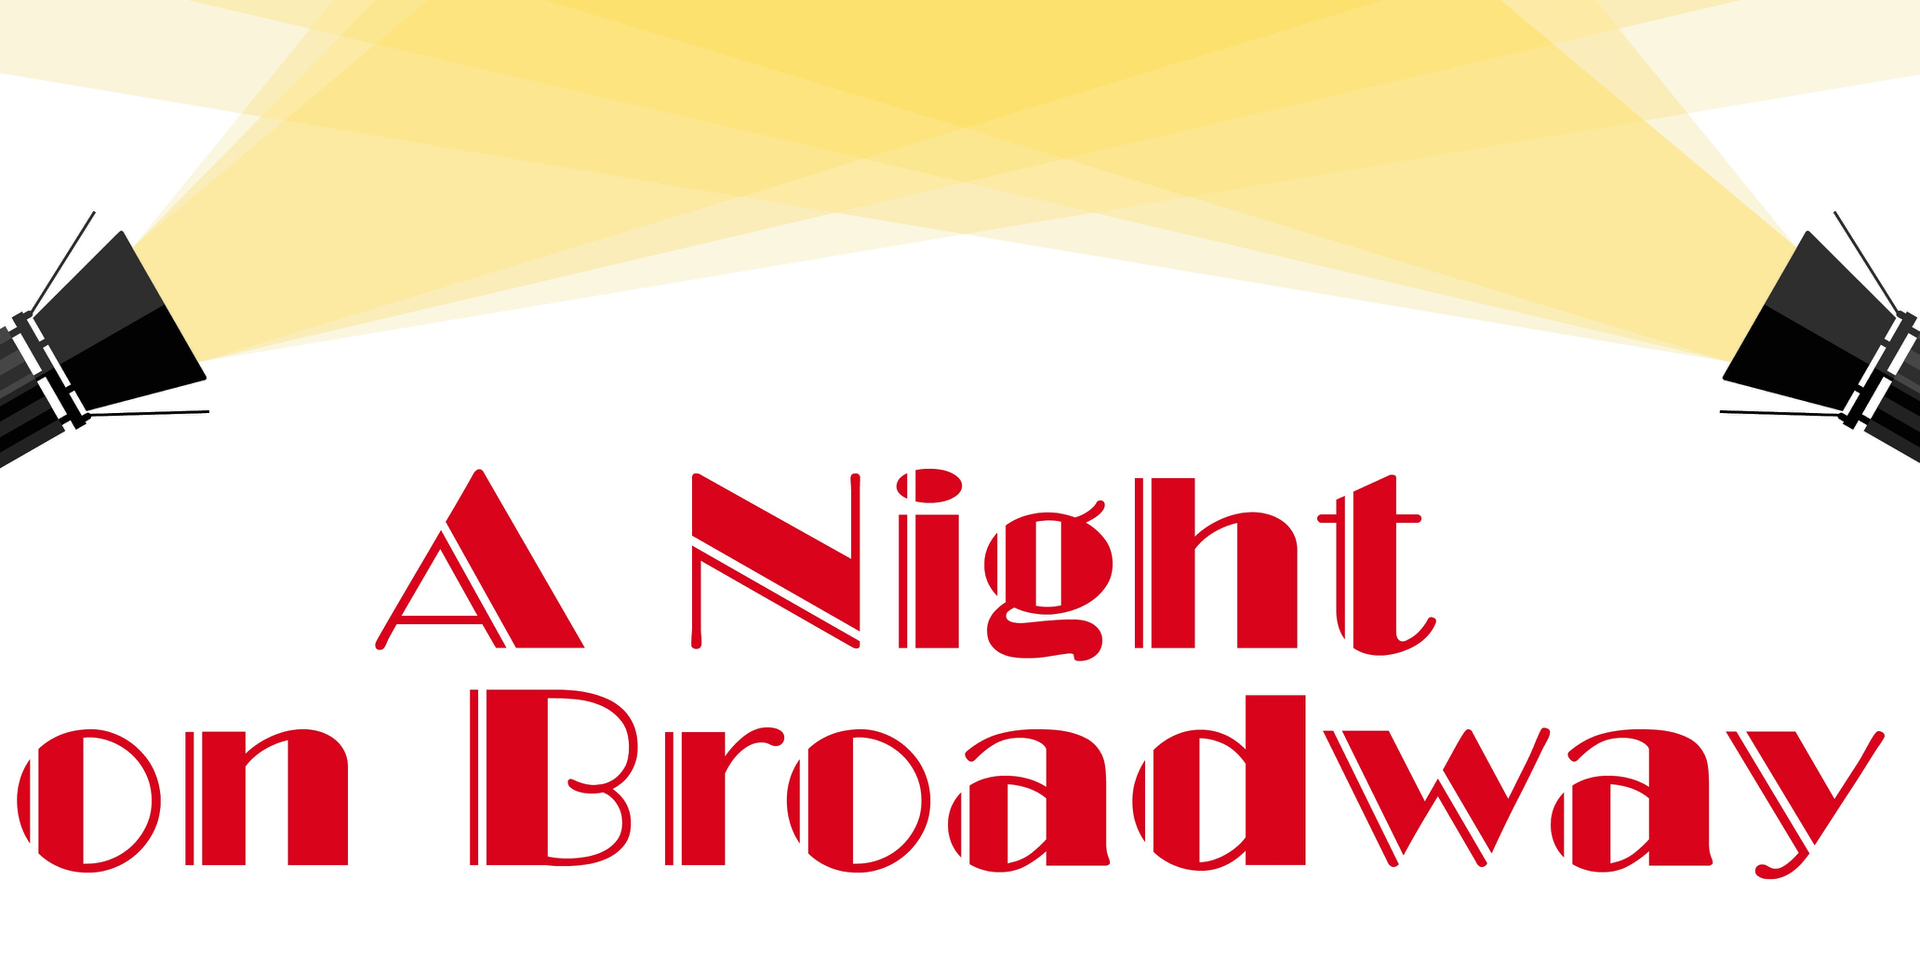 thumbnails A Night on Broadway Sponsorships!